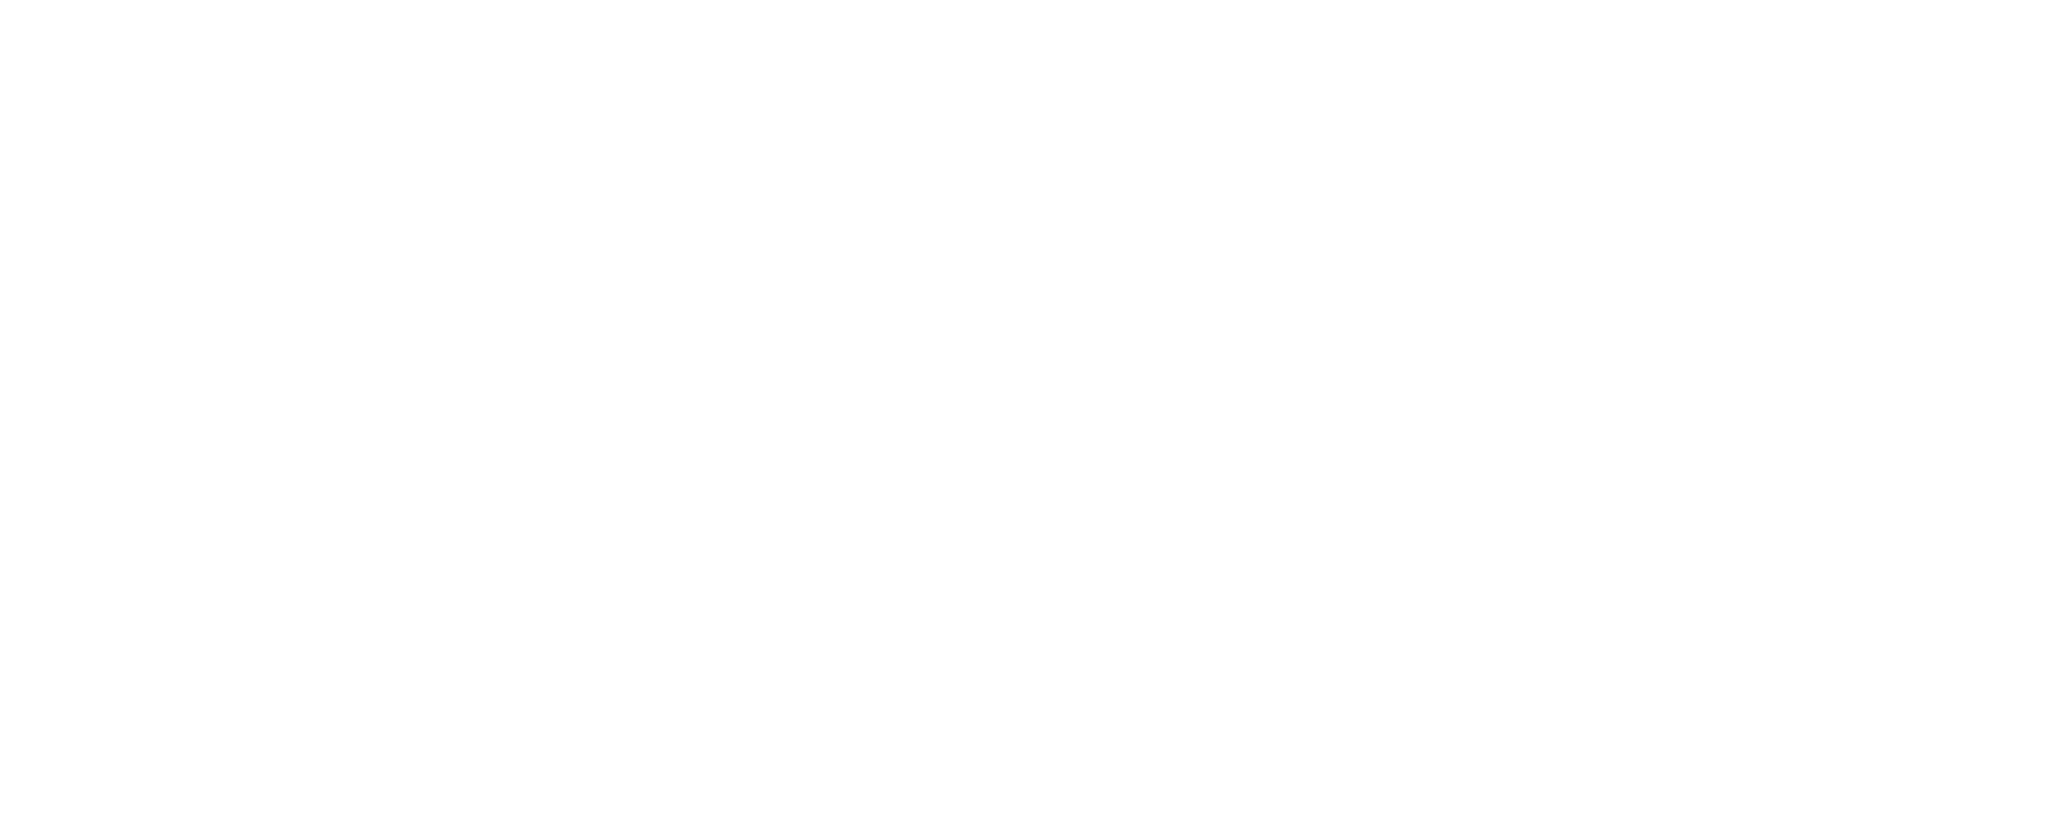 Nations Lending Logo - Mortgage Pros